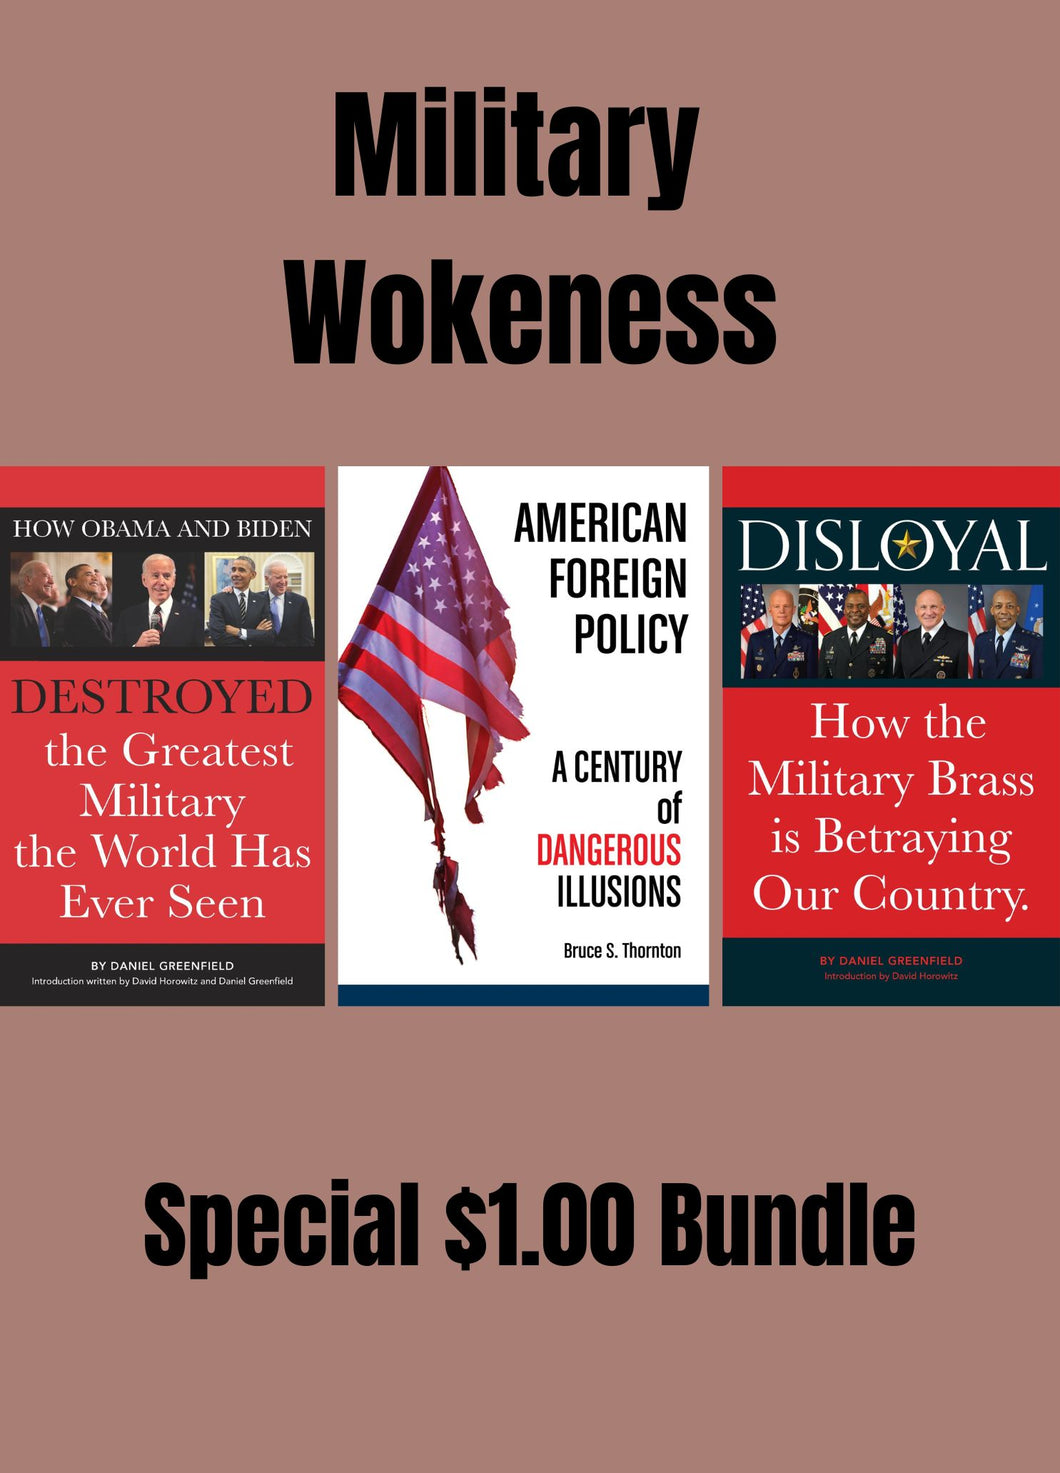 Special $1.00 Bundle: Military Wokeness